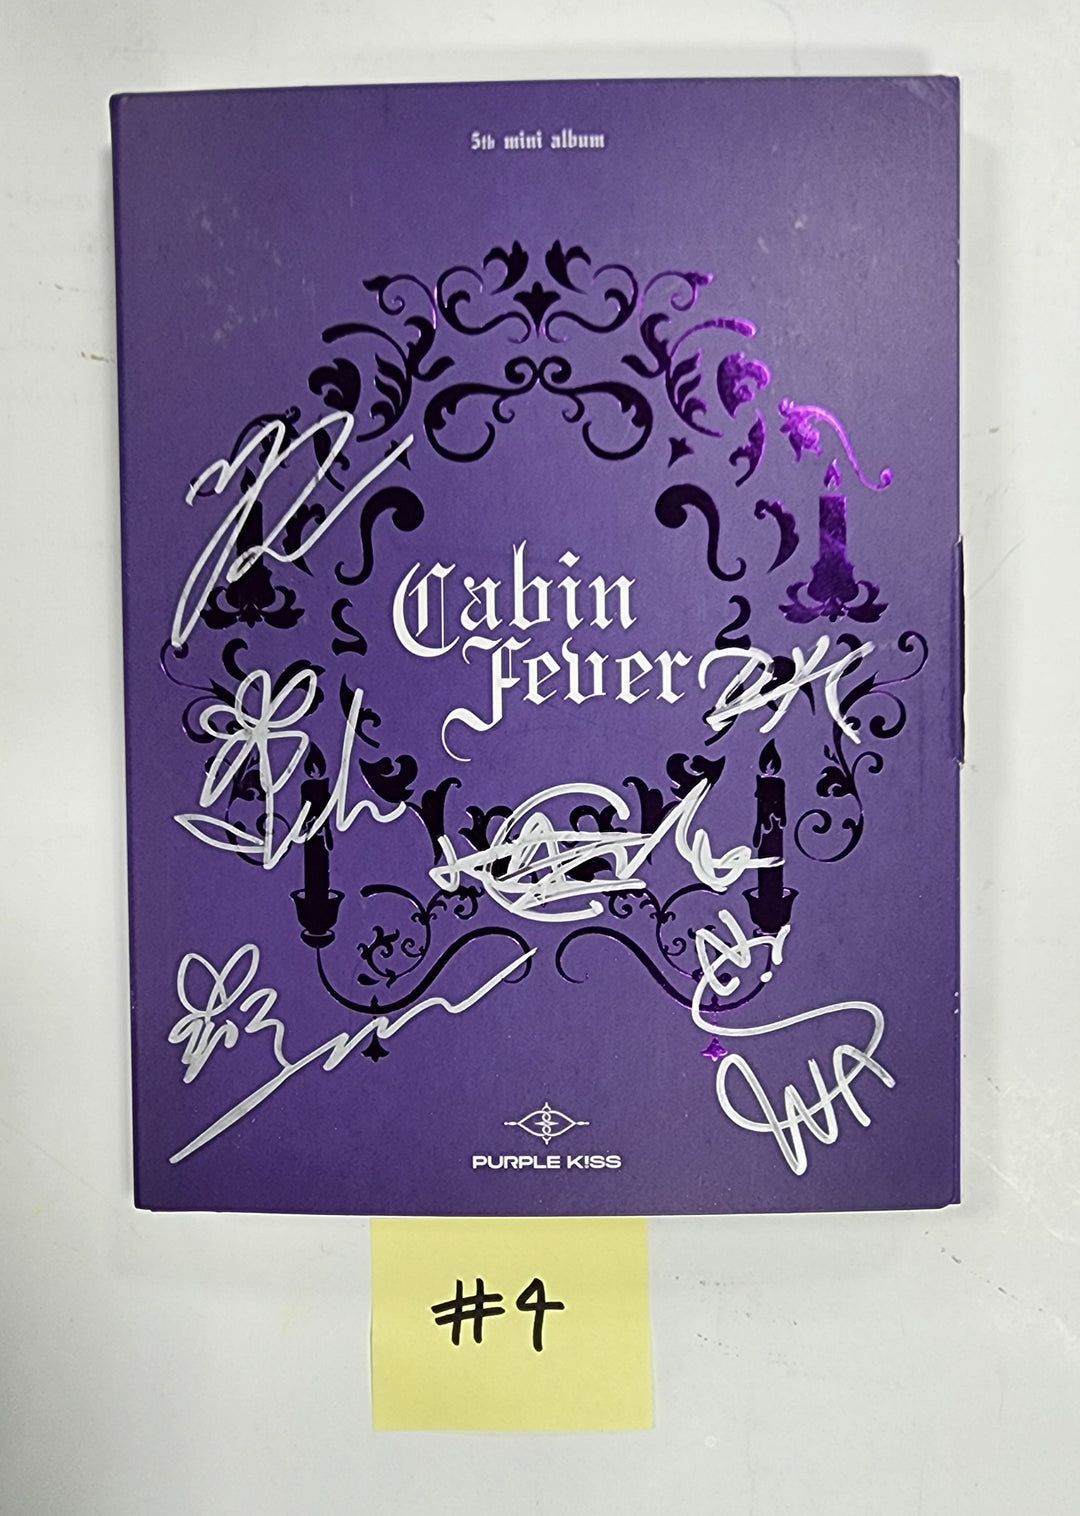 PURPLE KISS "Cabin Fever" - Hand Autographed(Signed) Promo Album